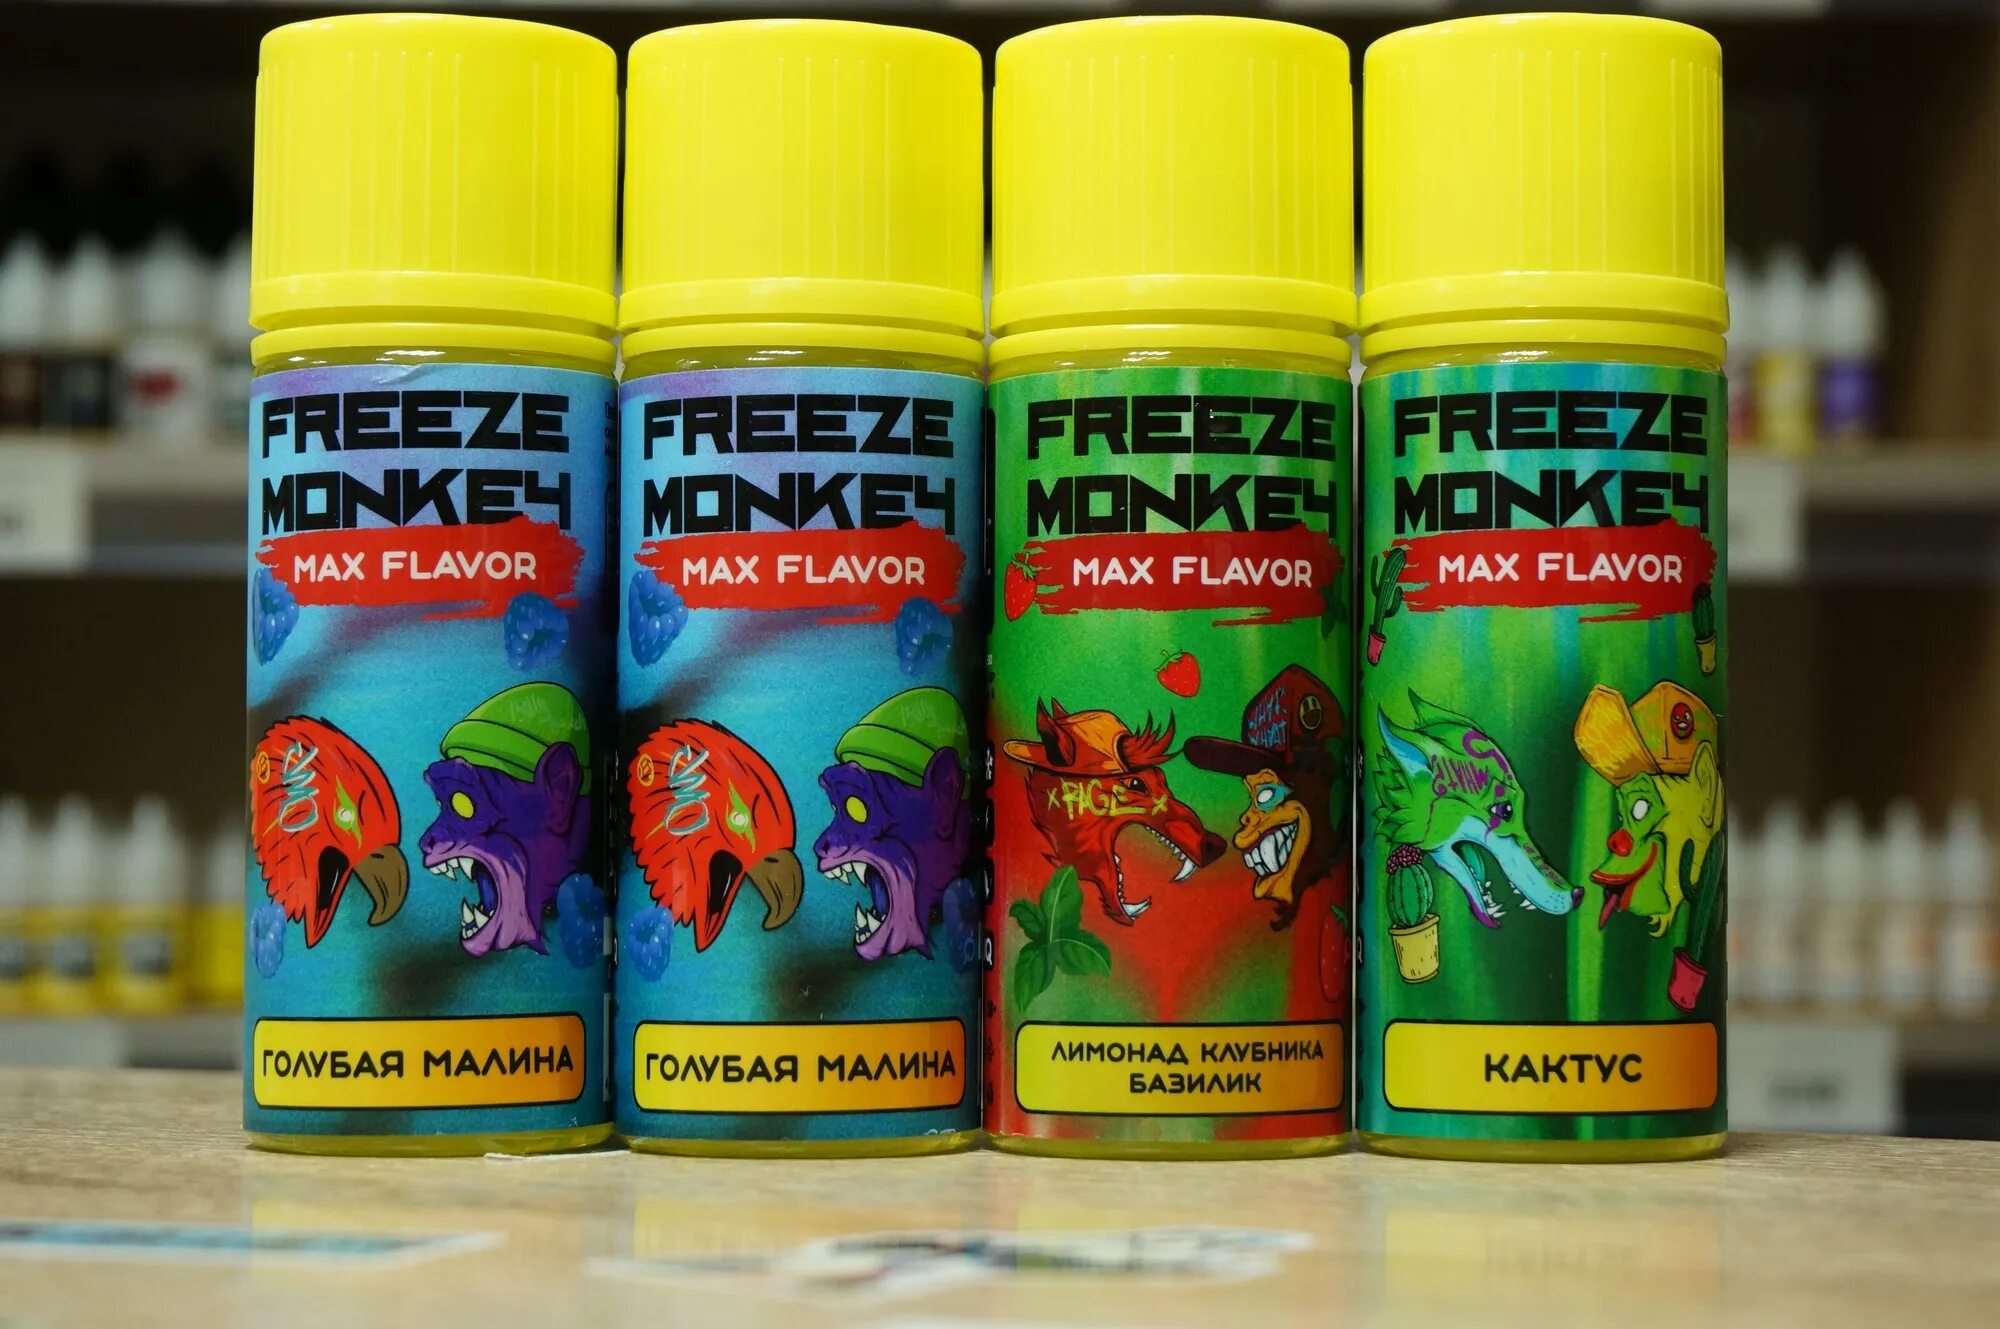 Frozen monkey. Жидкость Freeze Monkey Max flavor. Freeze Monkey Max flavor 120ml. Freeze Monkey Max flavor 120 мл. Max flavor жидкость.